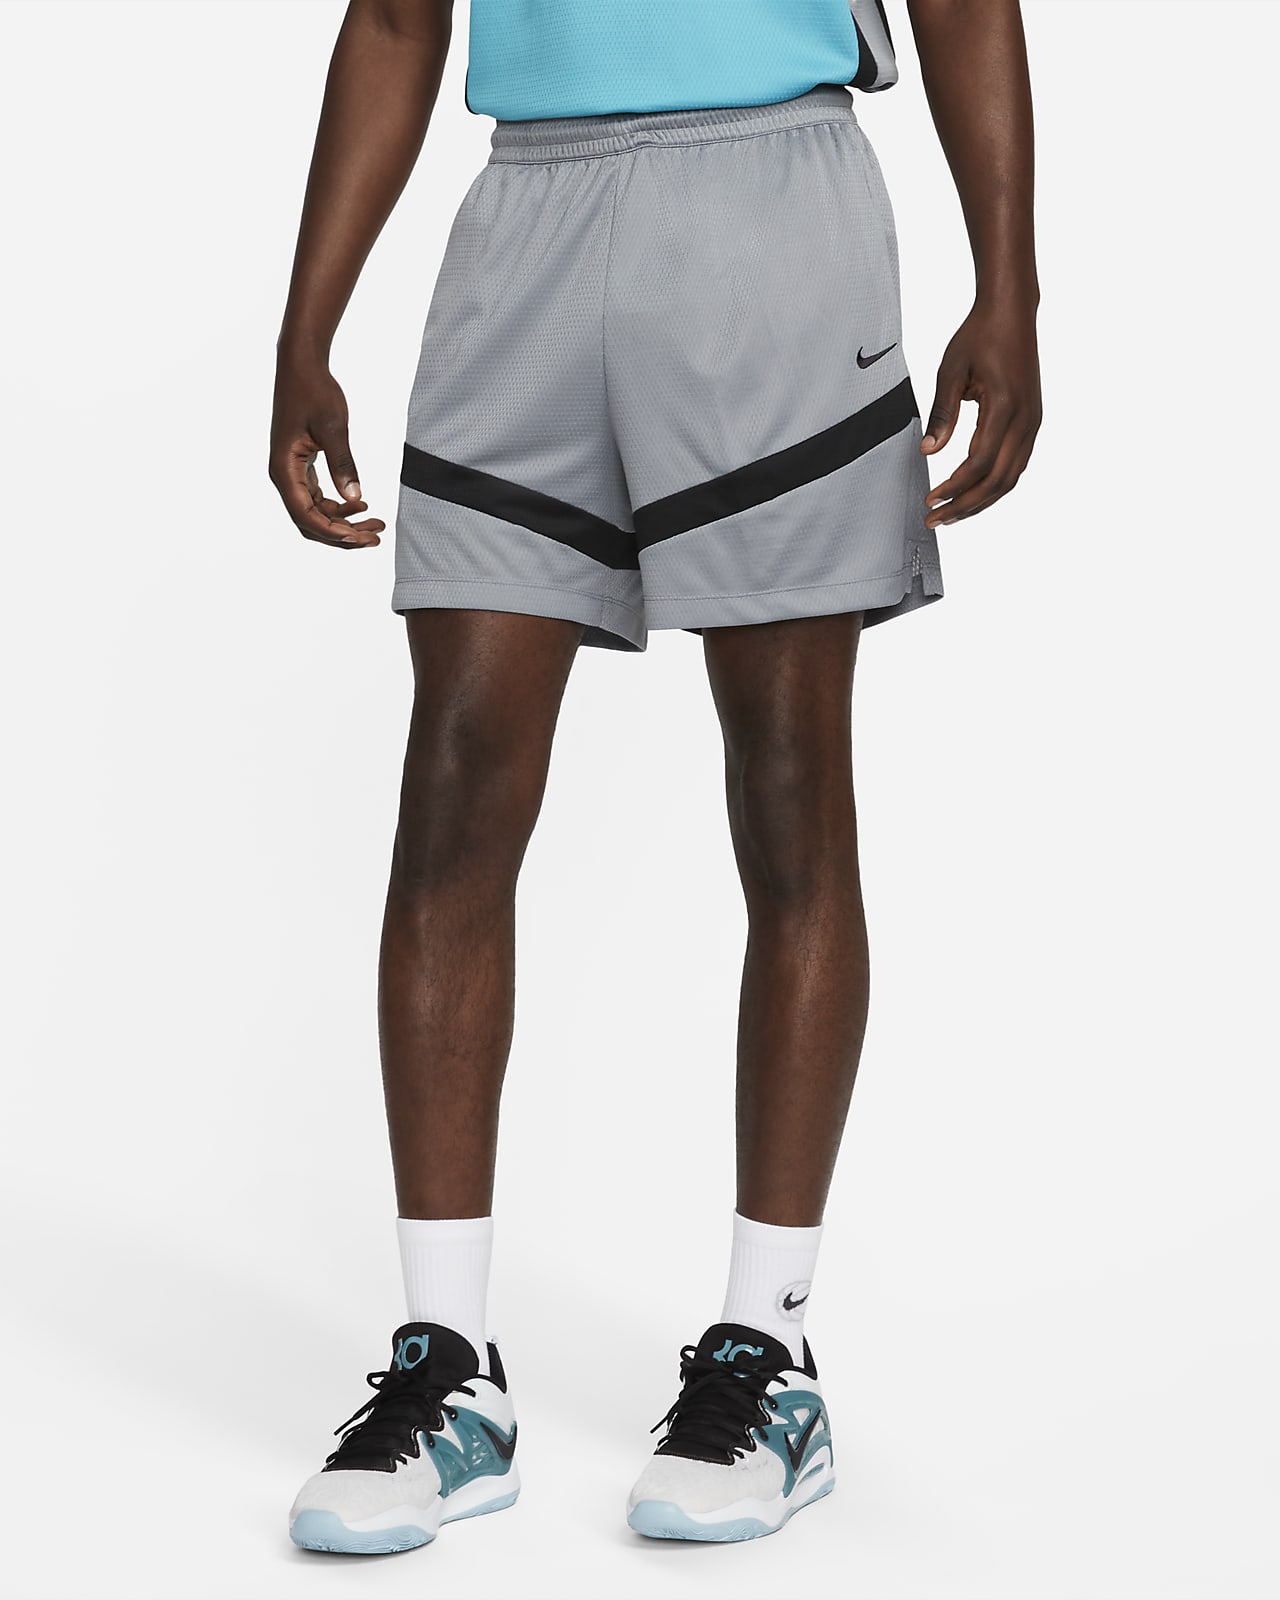 Nike Men's Icon Dri-Fit Basketball Jersey Blue